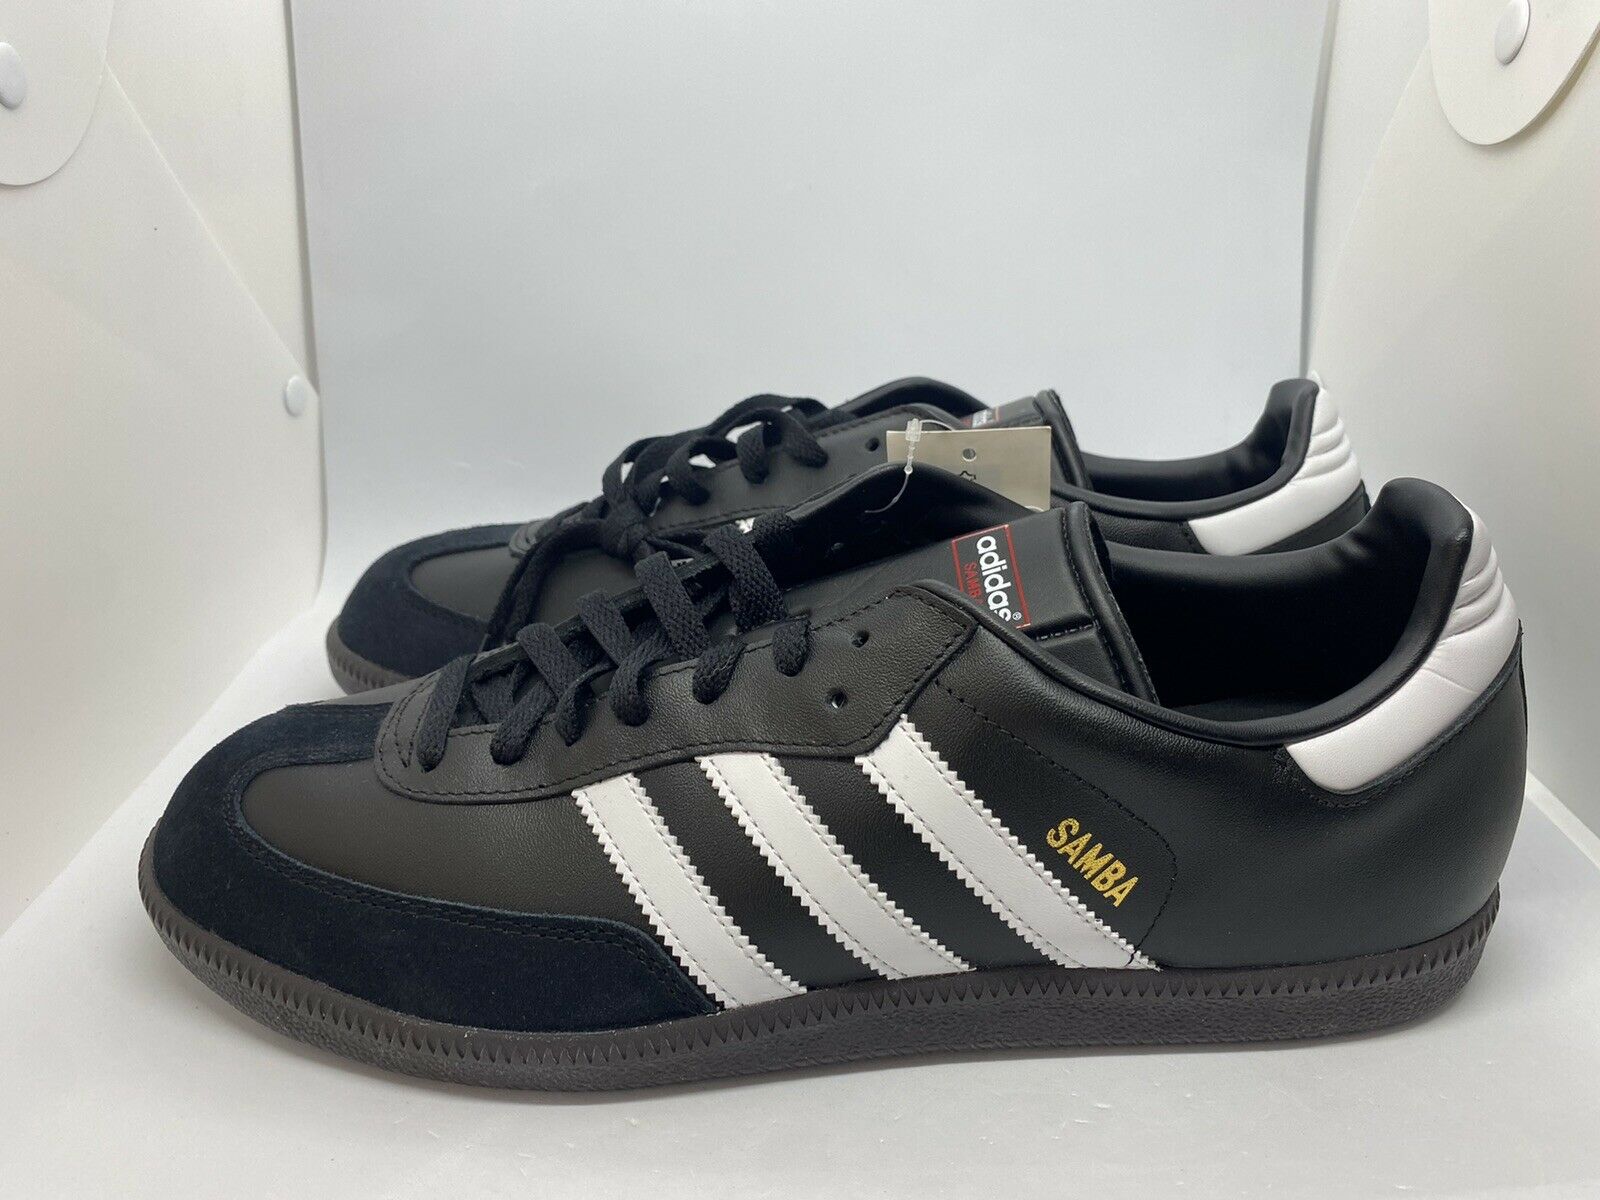 Adidas Samba Classic Black Leather Sneakers Shoes Men’s Sz 12 019000